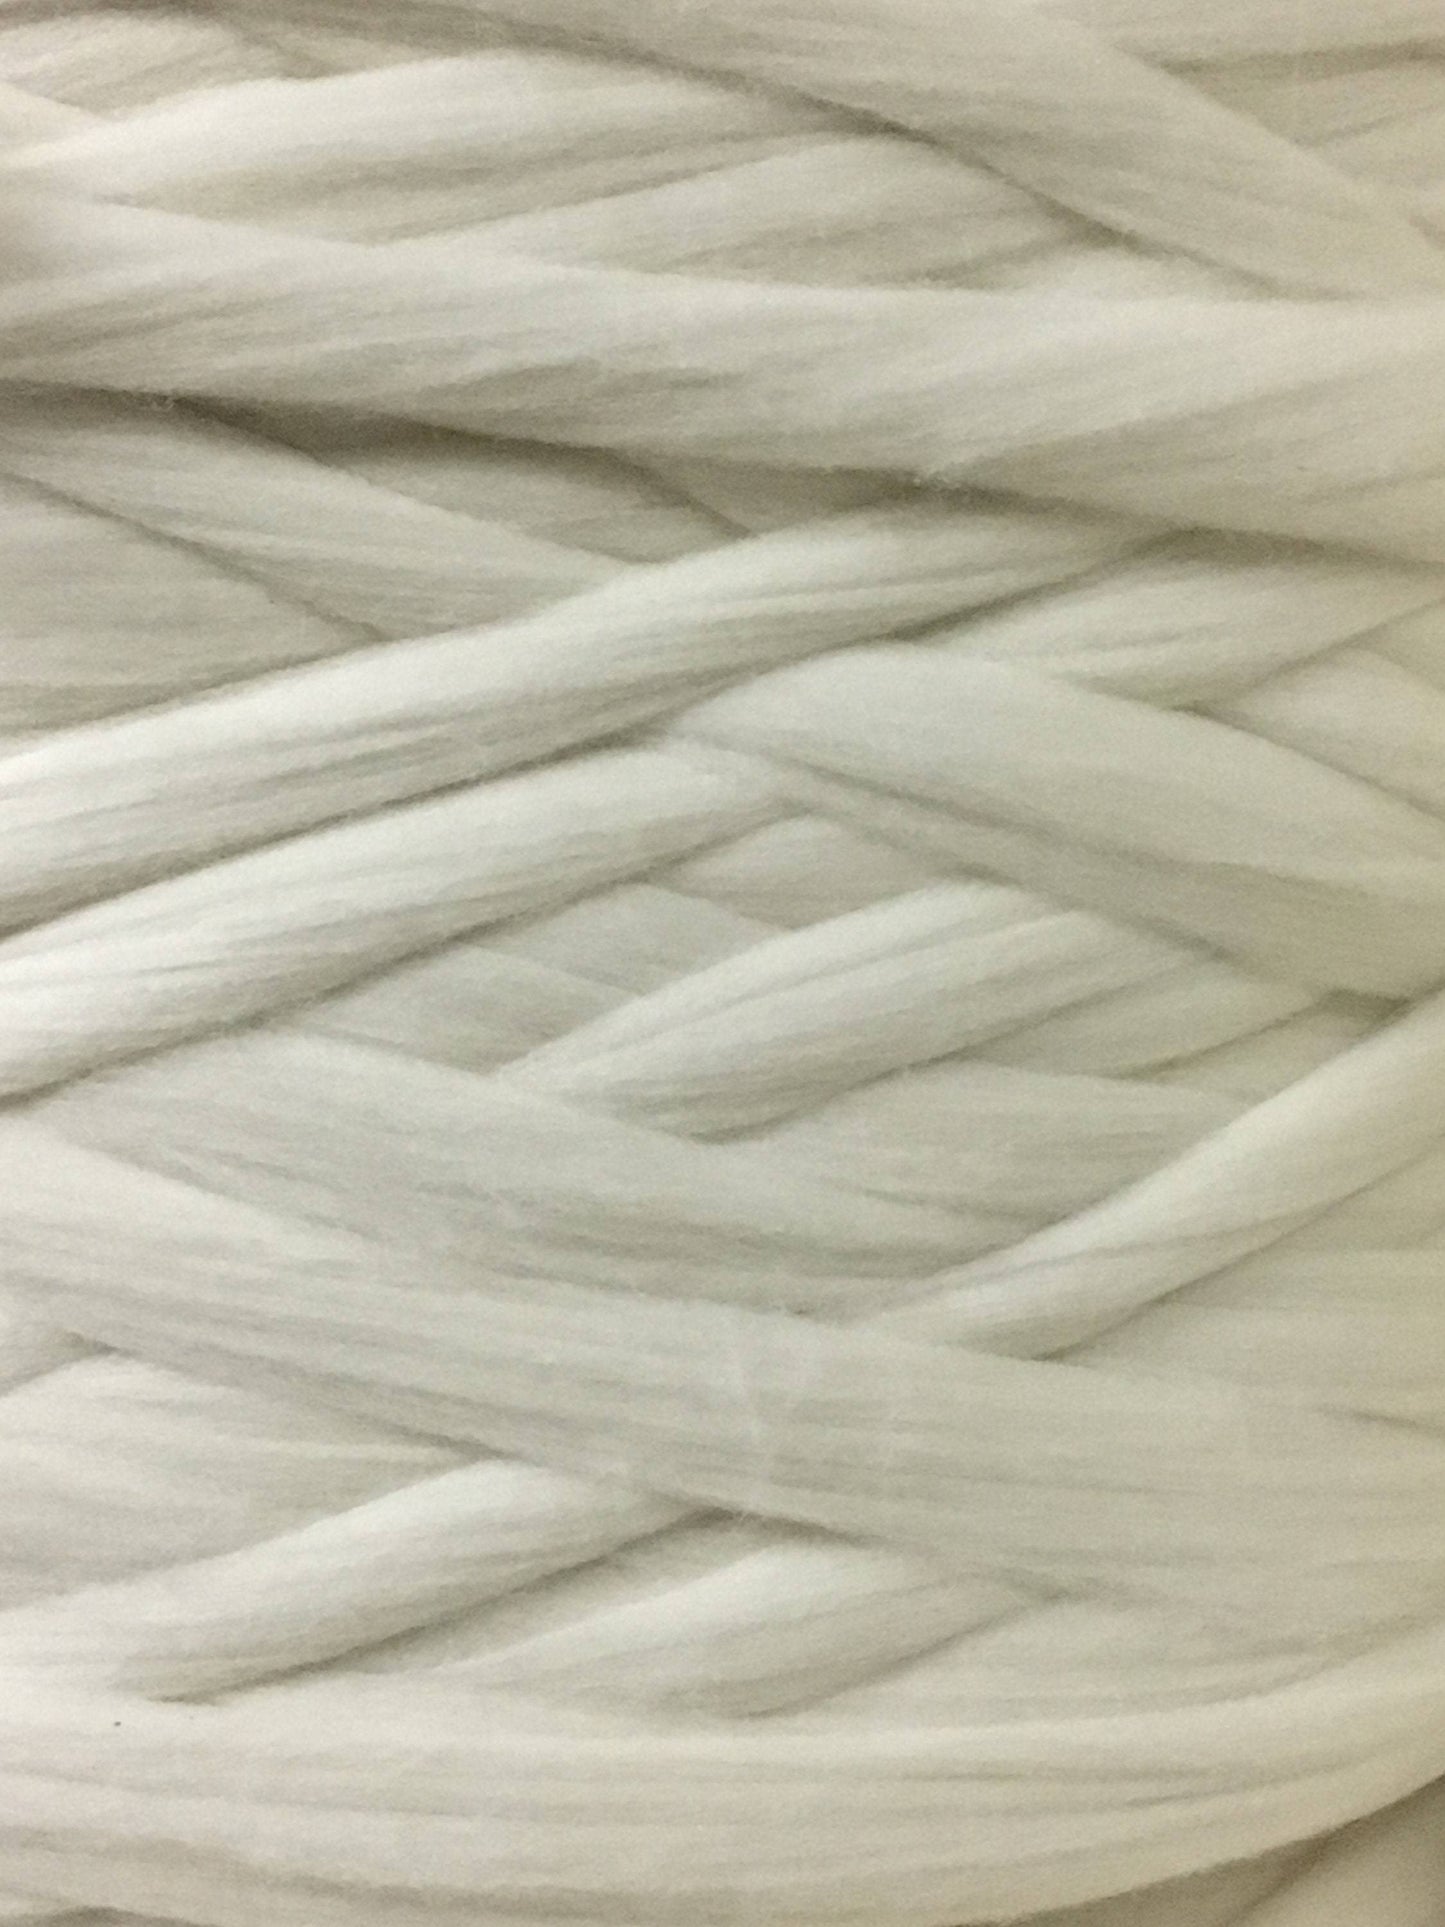 Make Chunky Knit Blanket Wool Roving Top Yarm  8 lbs Pounds White DIY Roving Fiber Spinning, Make Your Own- chunky yarn , knitting yarn,